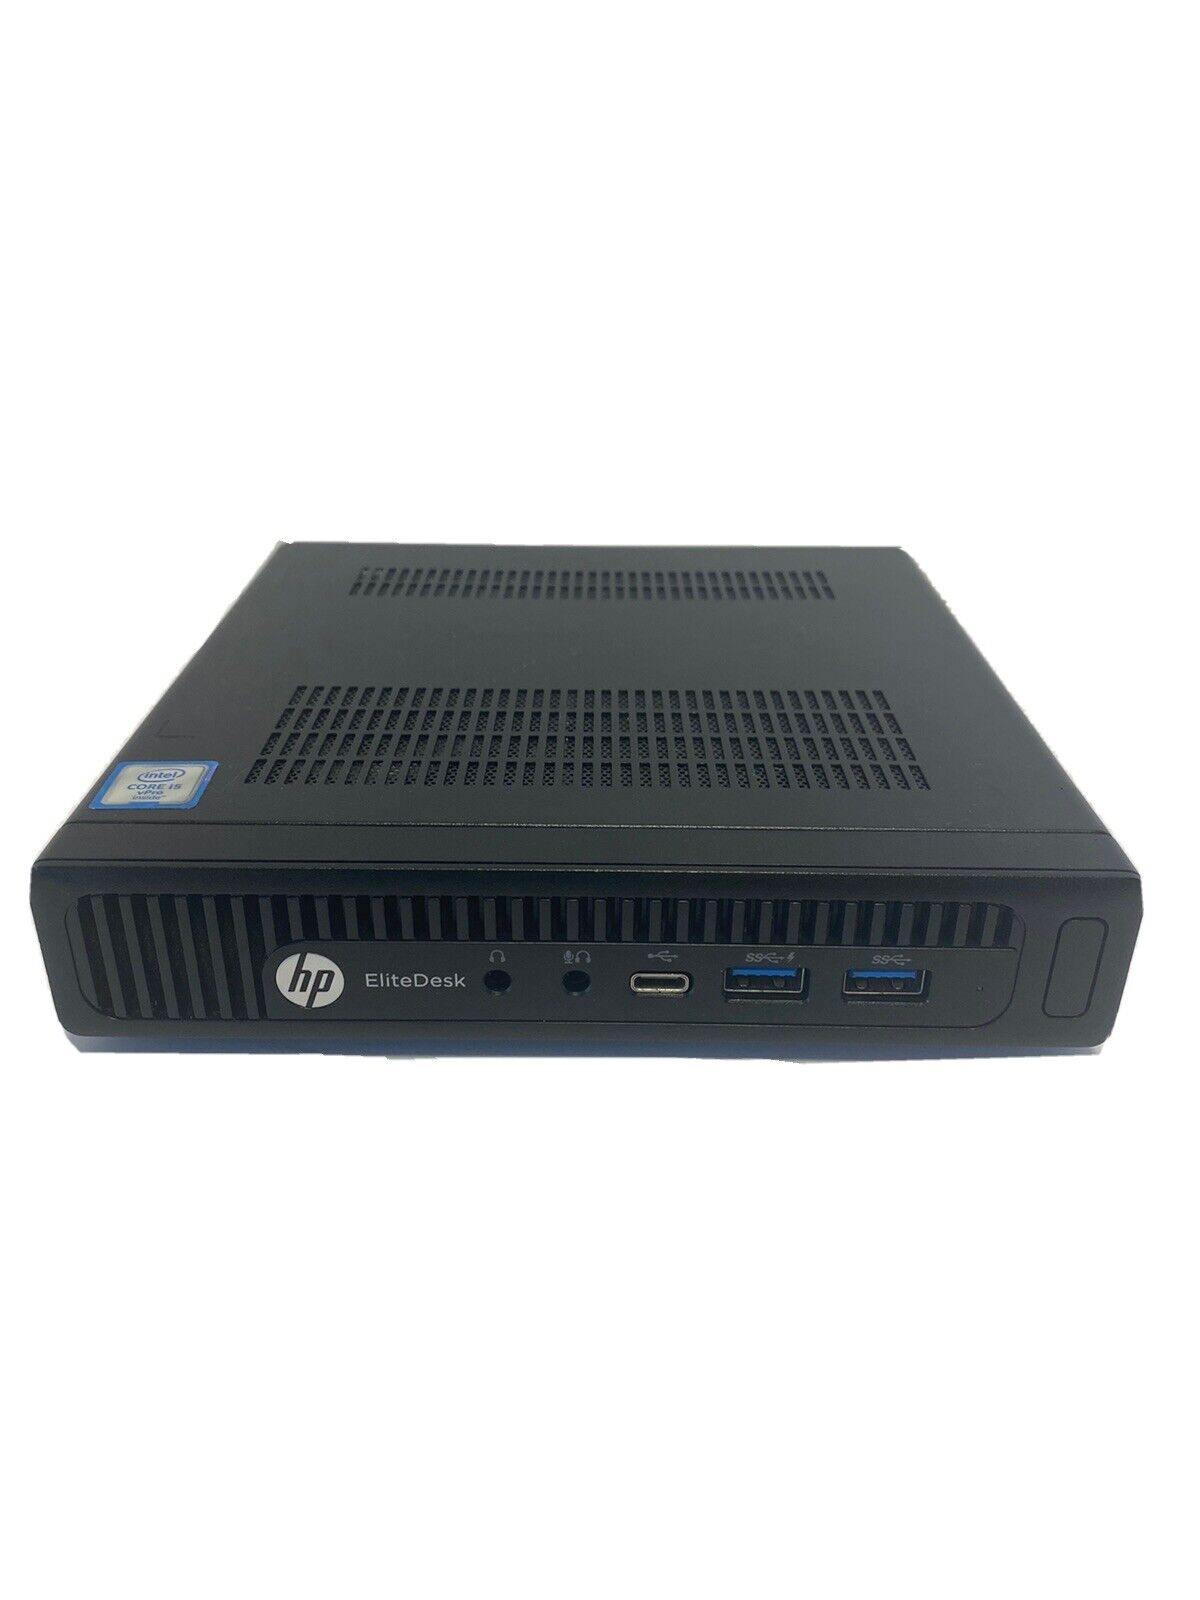 HP EliteDesk 800 G2 (Intel Core i5-6500 3.2GHz 8GB) Mini PC Desktop